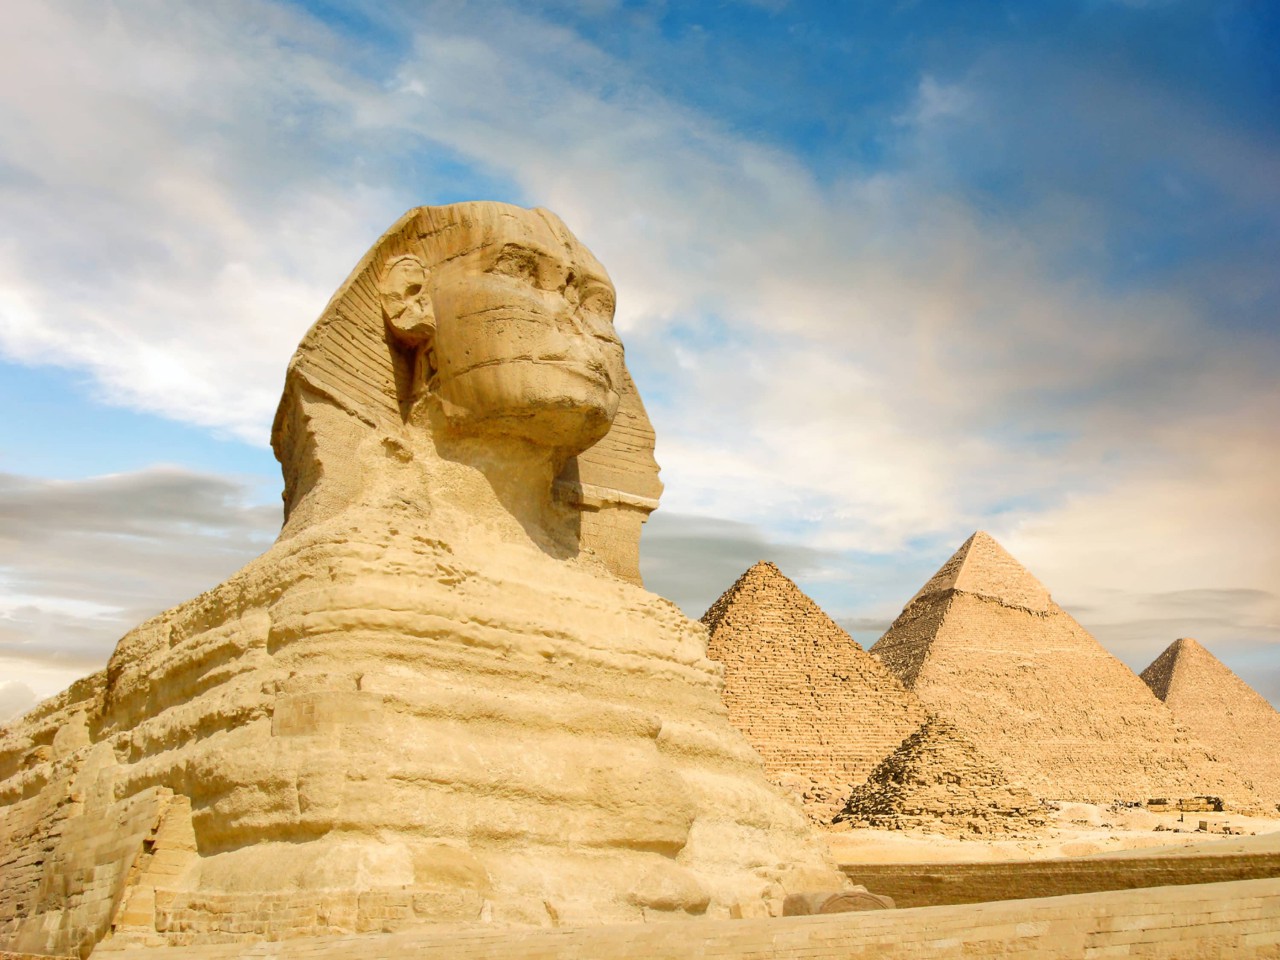 Sphinx, Giza Pyramids, Egypt